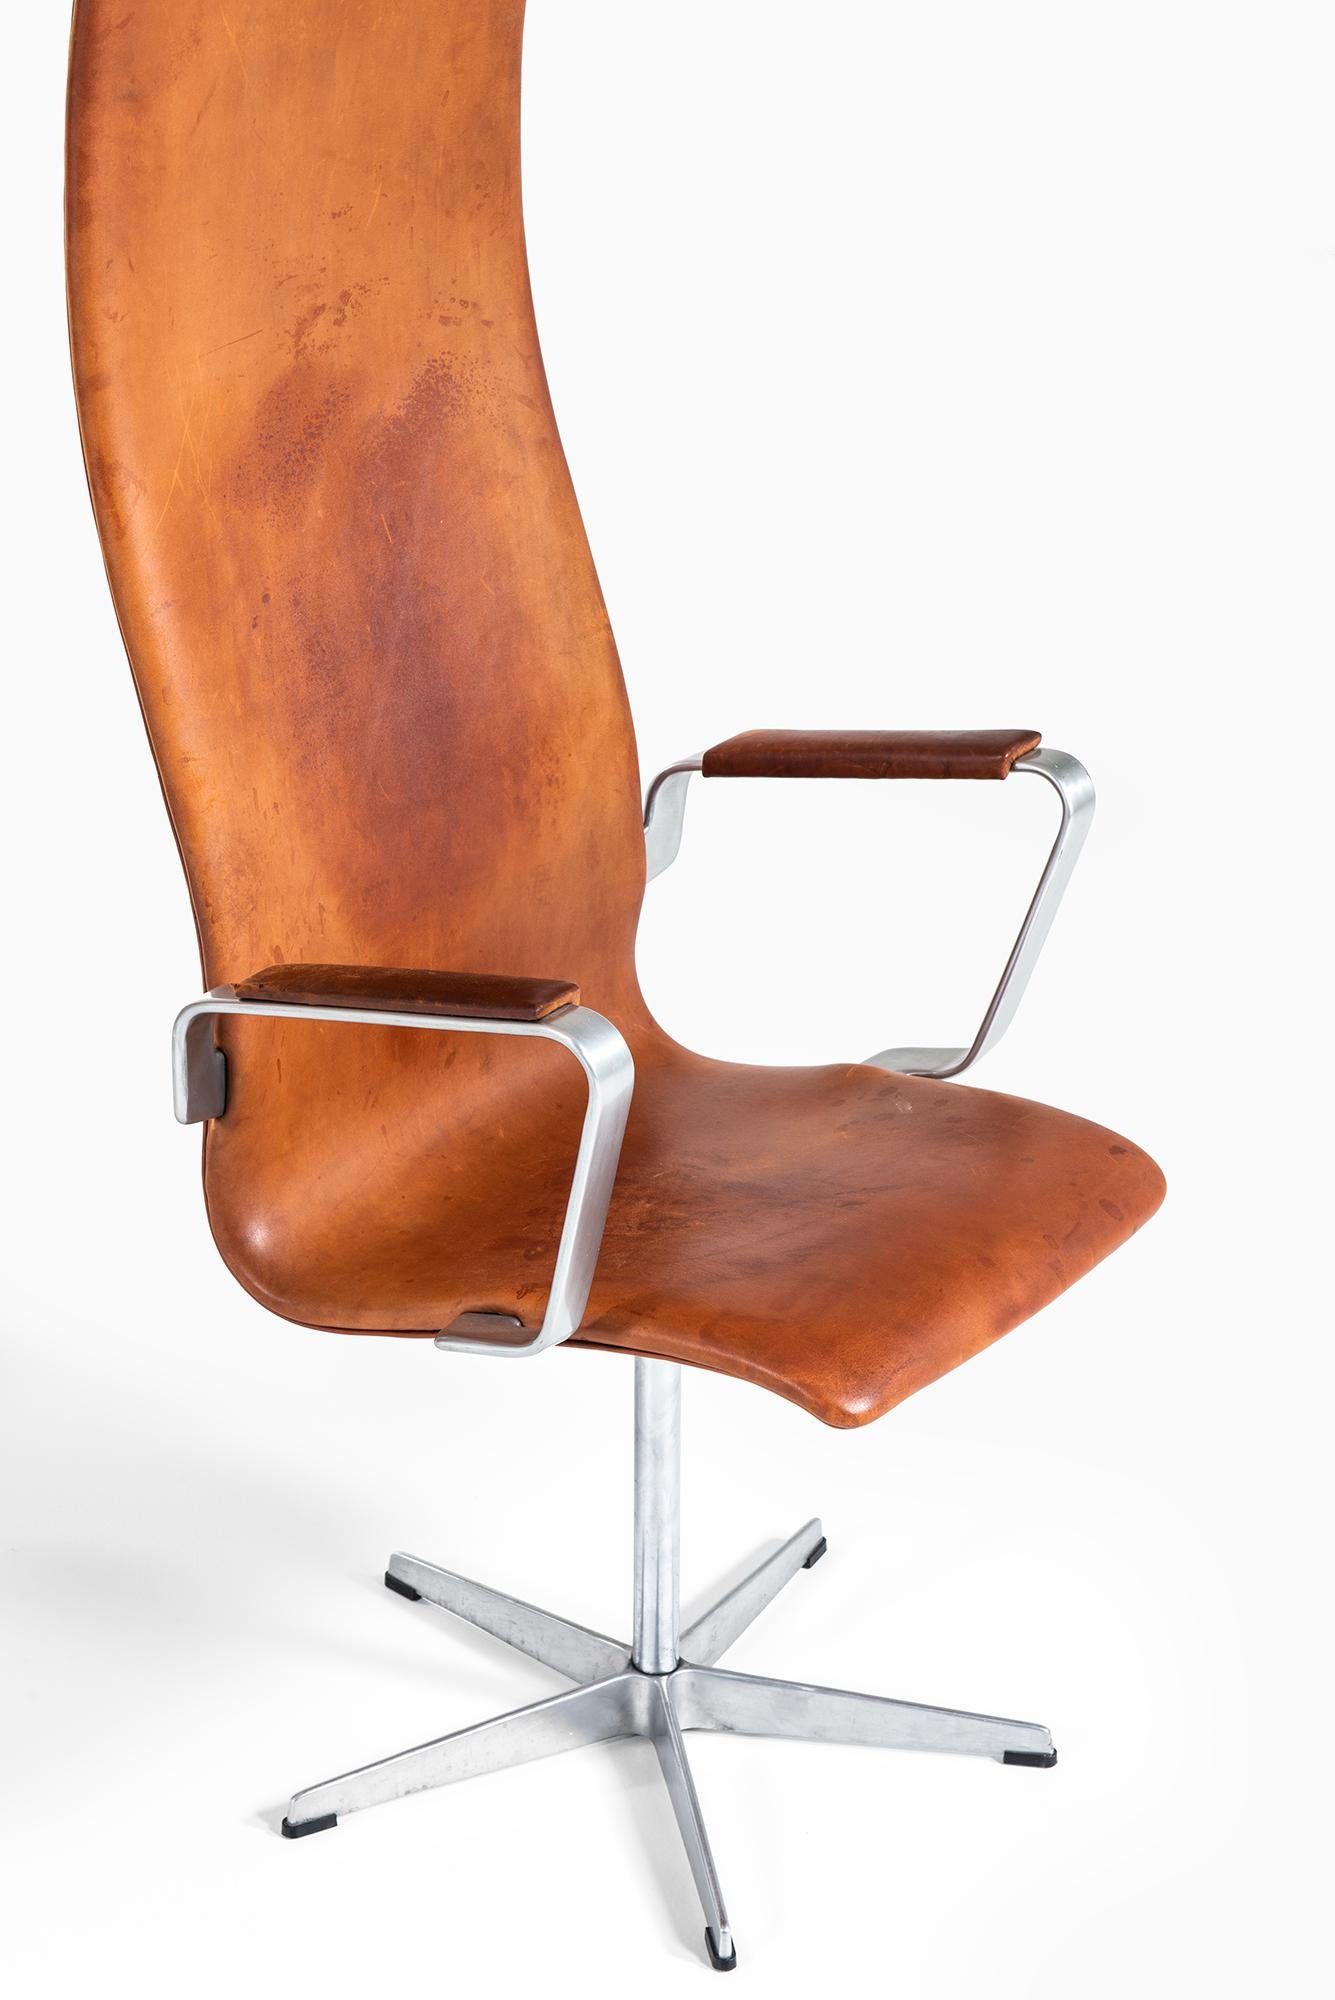 Arne Jacobsen Oxford Chairs Model 3272 by Fritz Hansen in Denmark For Sale 2